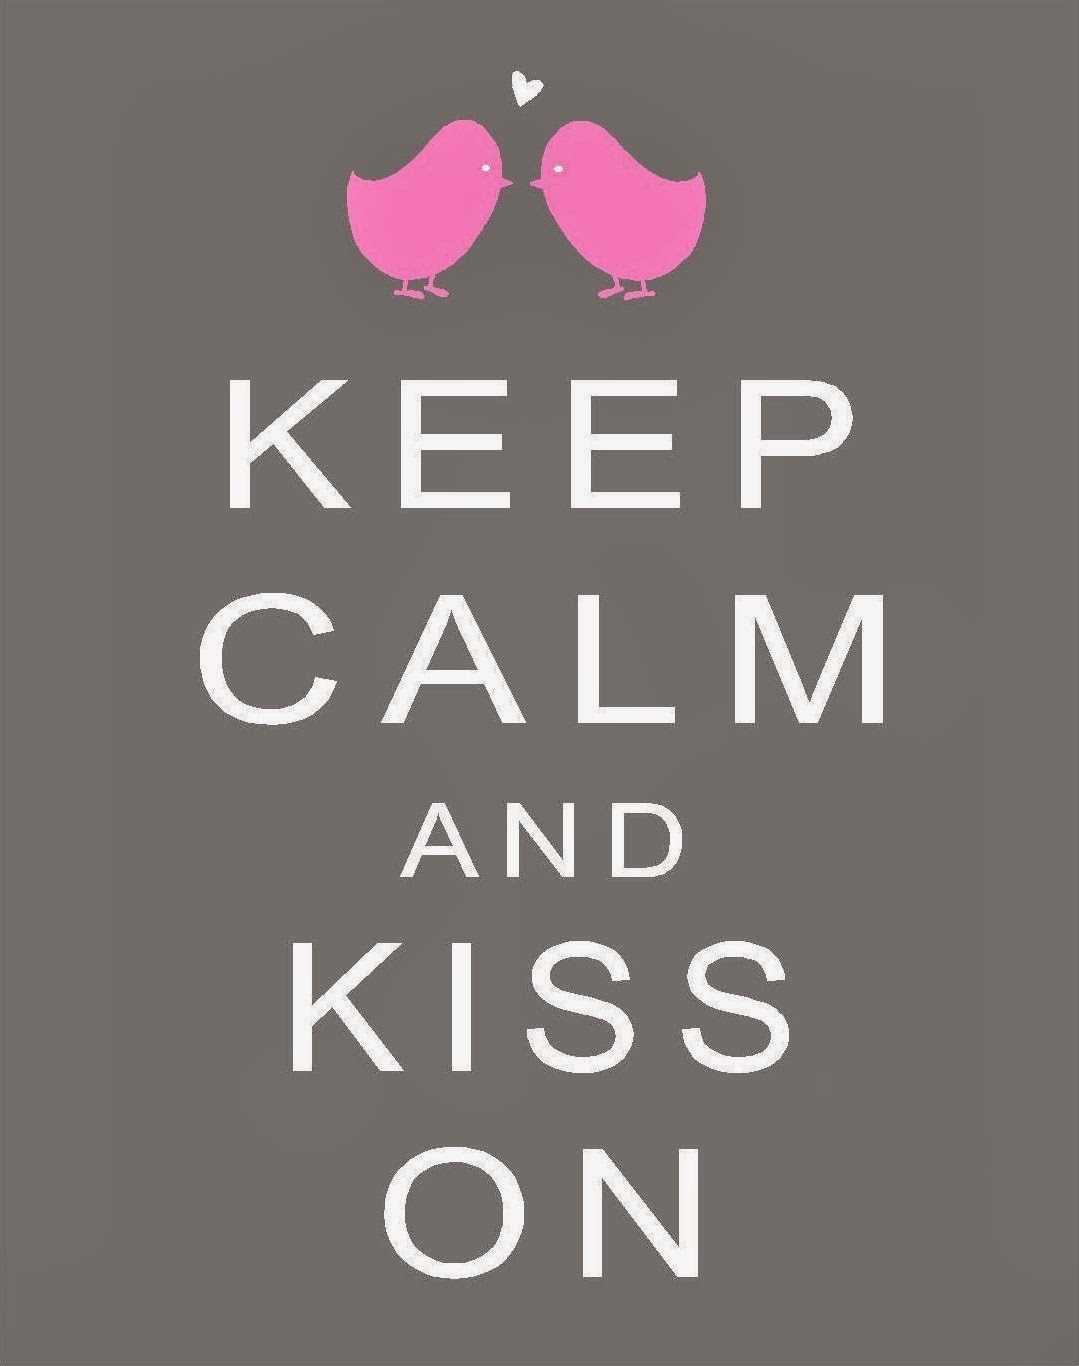 http://lollyjane.com/keep-calm-kiss-on/